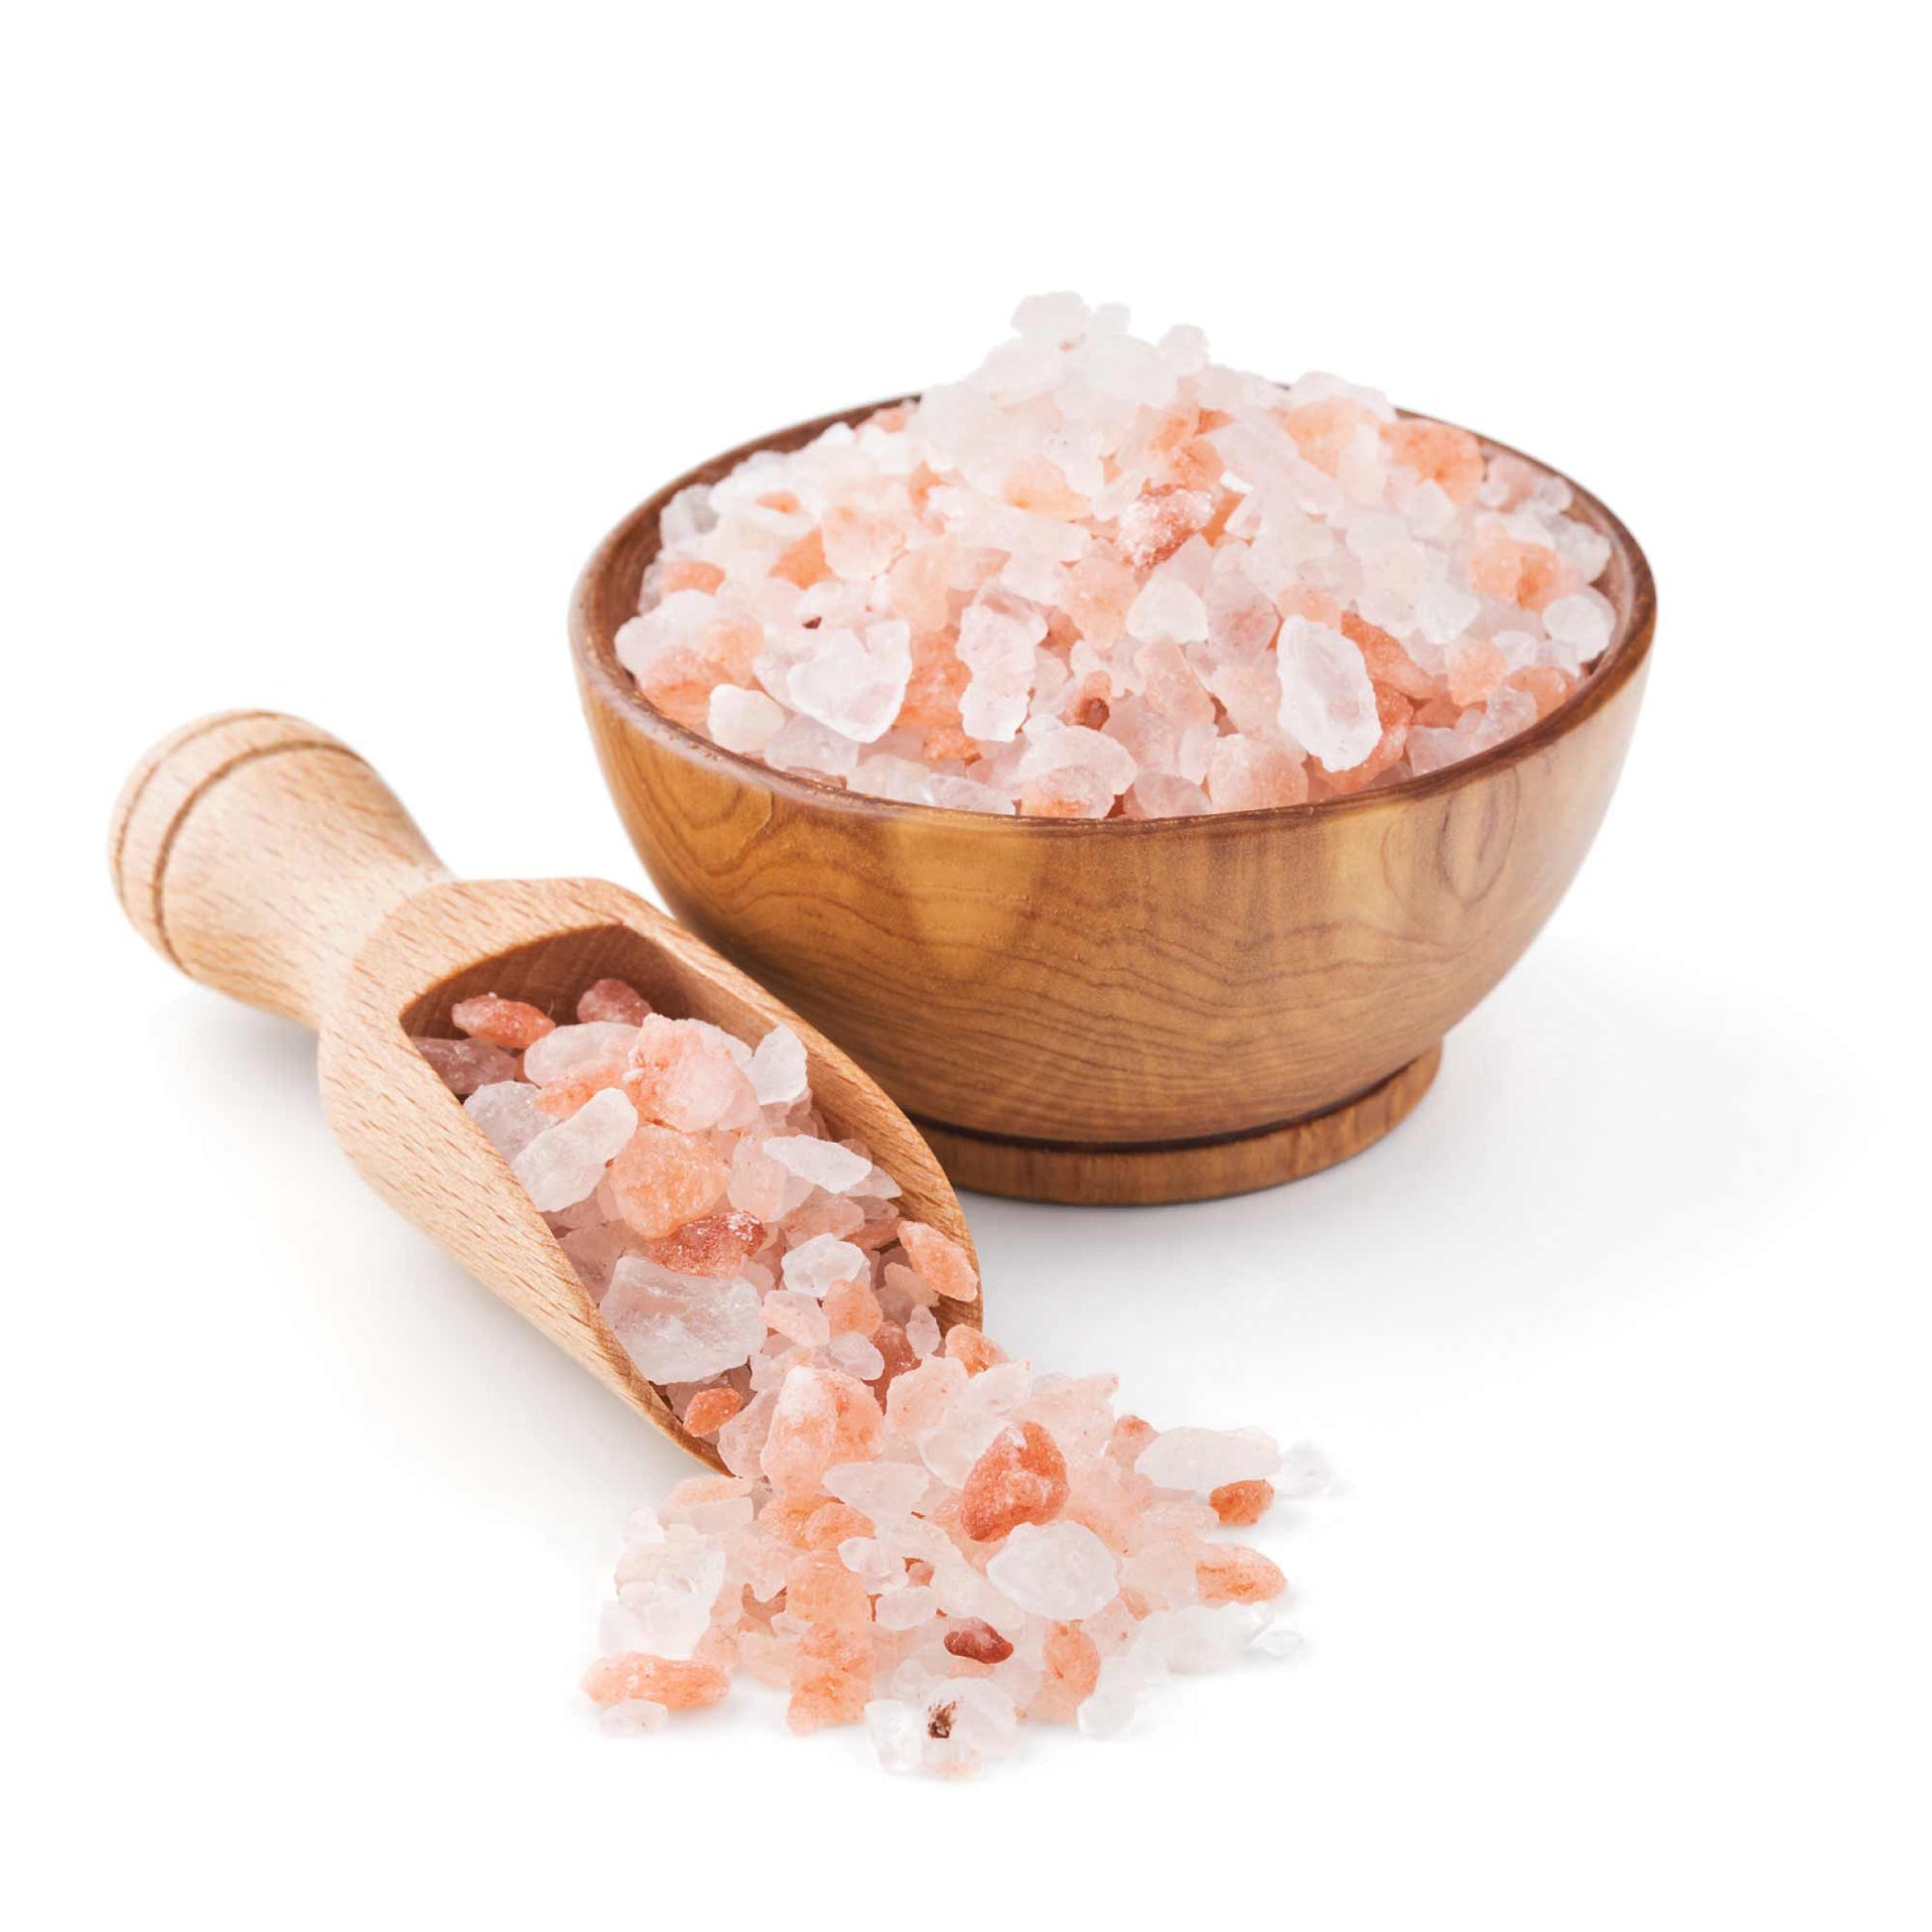 12x 1Kg Coarse Himalayan Pink Rock Salt - Bath Cooking Grinder Crystals Bulk